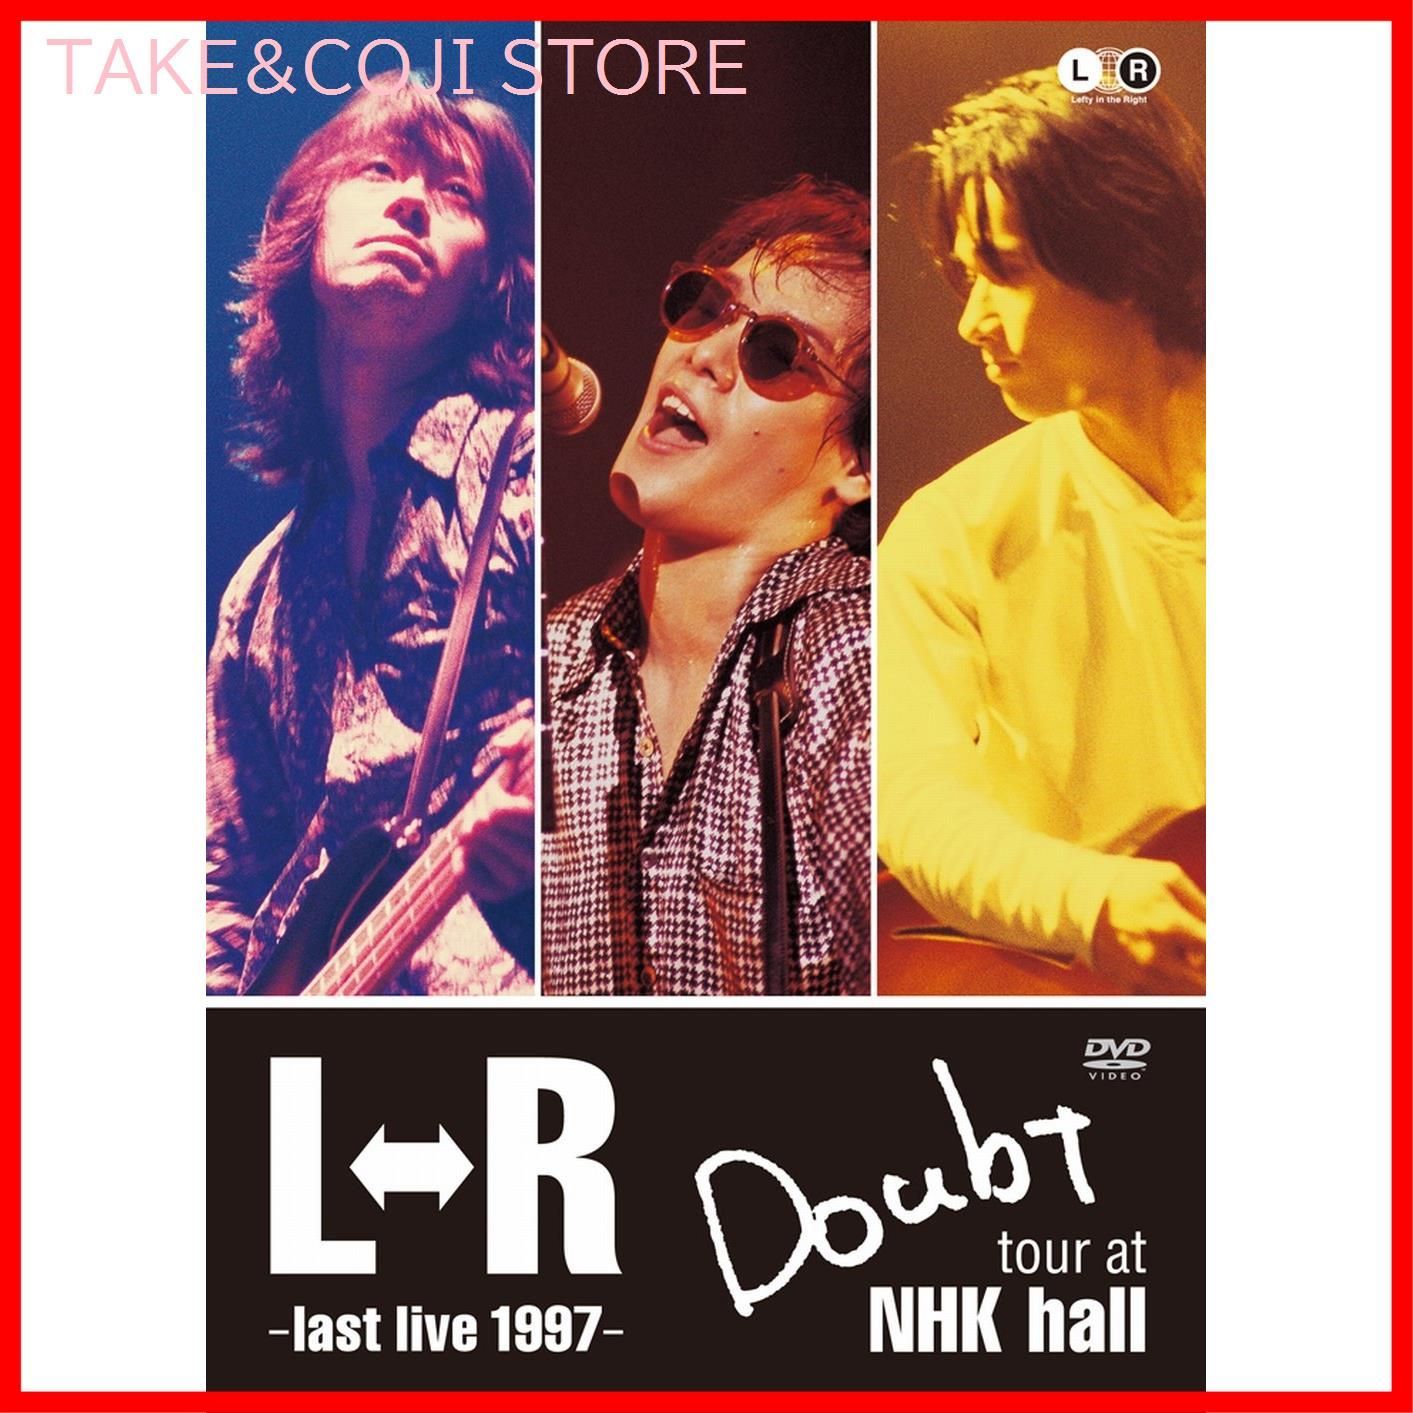 【新品未開封】L⇔R Doubt tour at NHK hall~last live 1997~ [DVD] L⇔R (出演) 形式: DVD